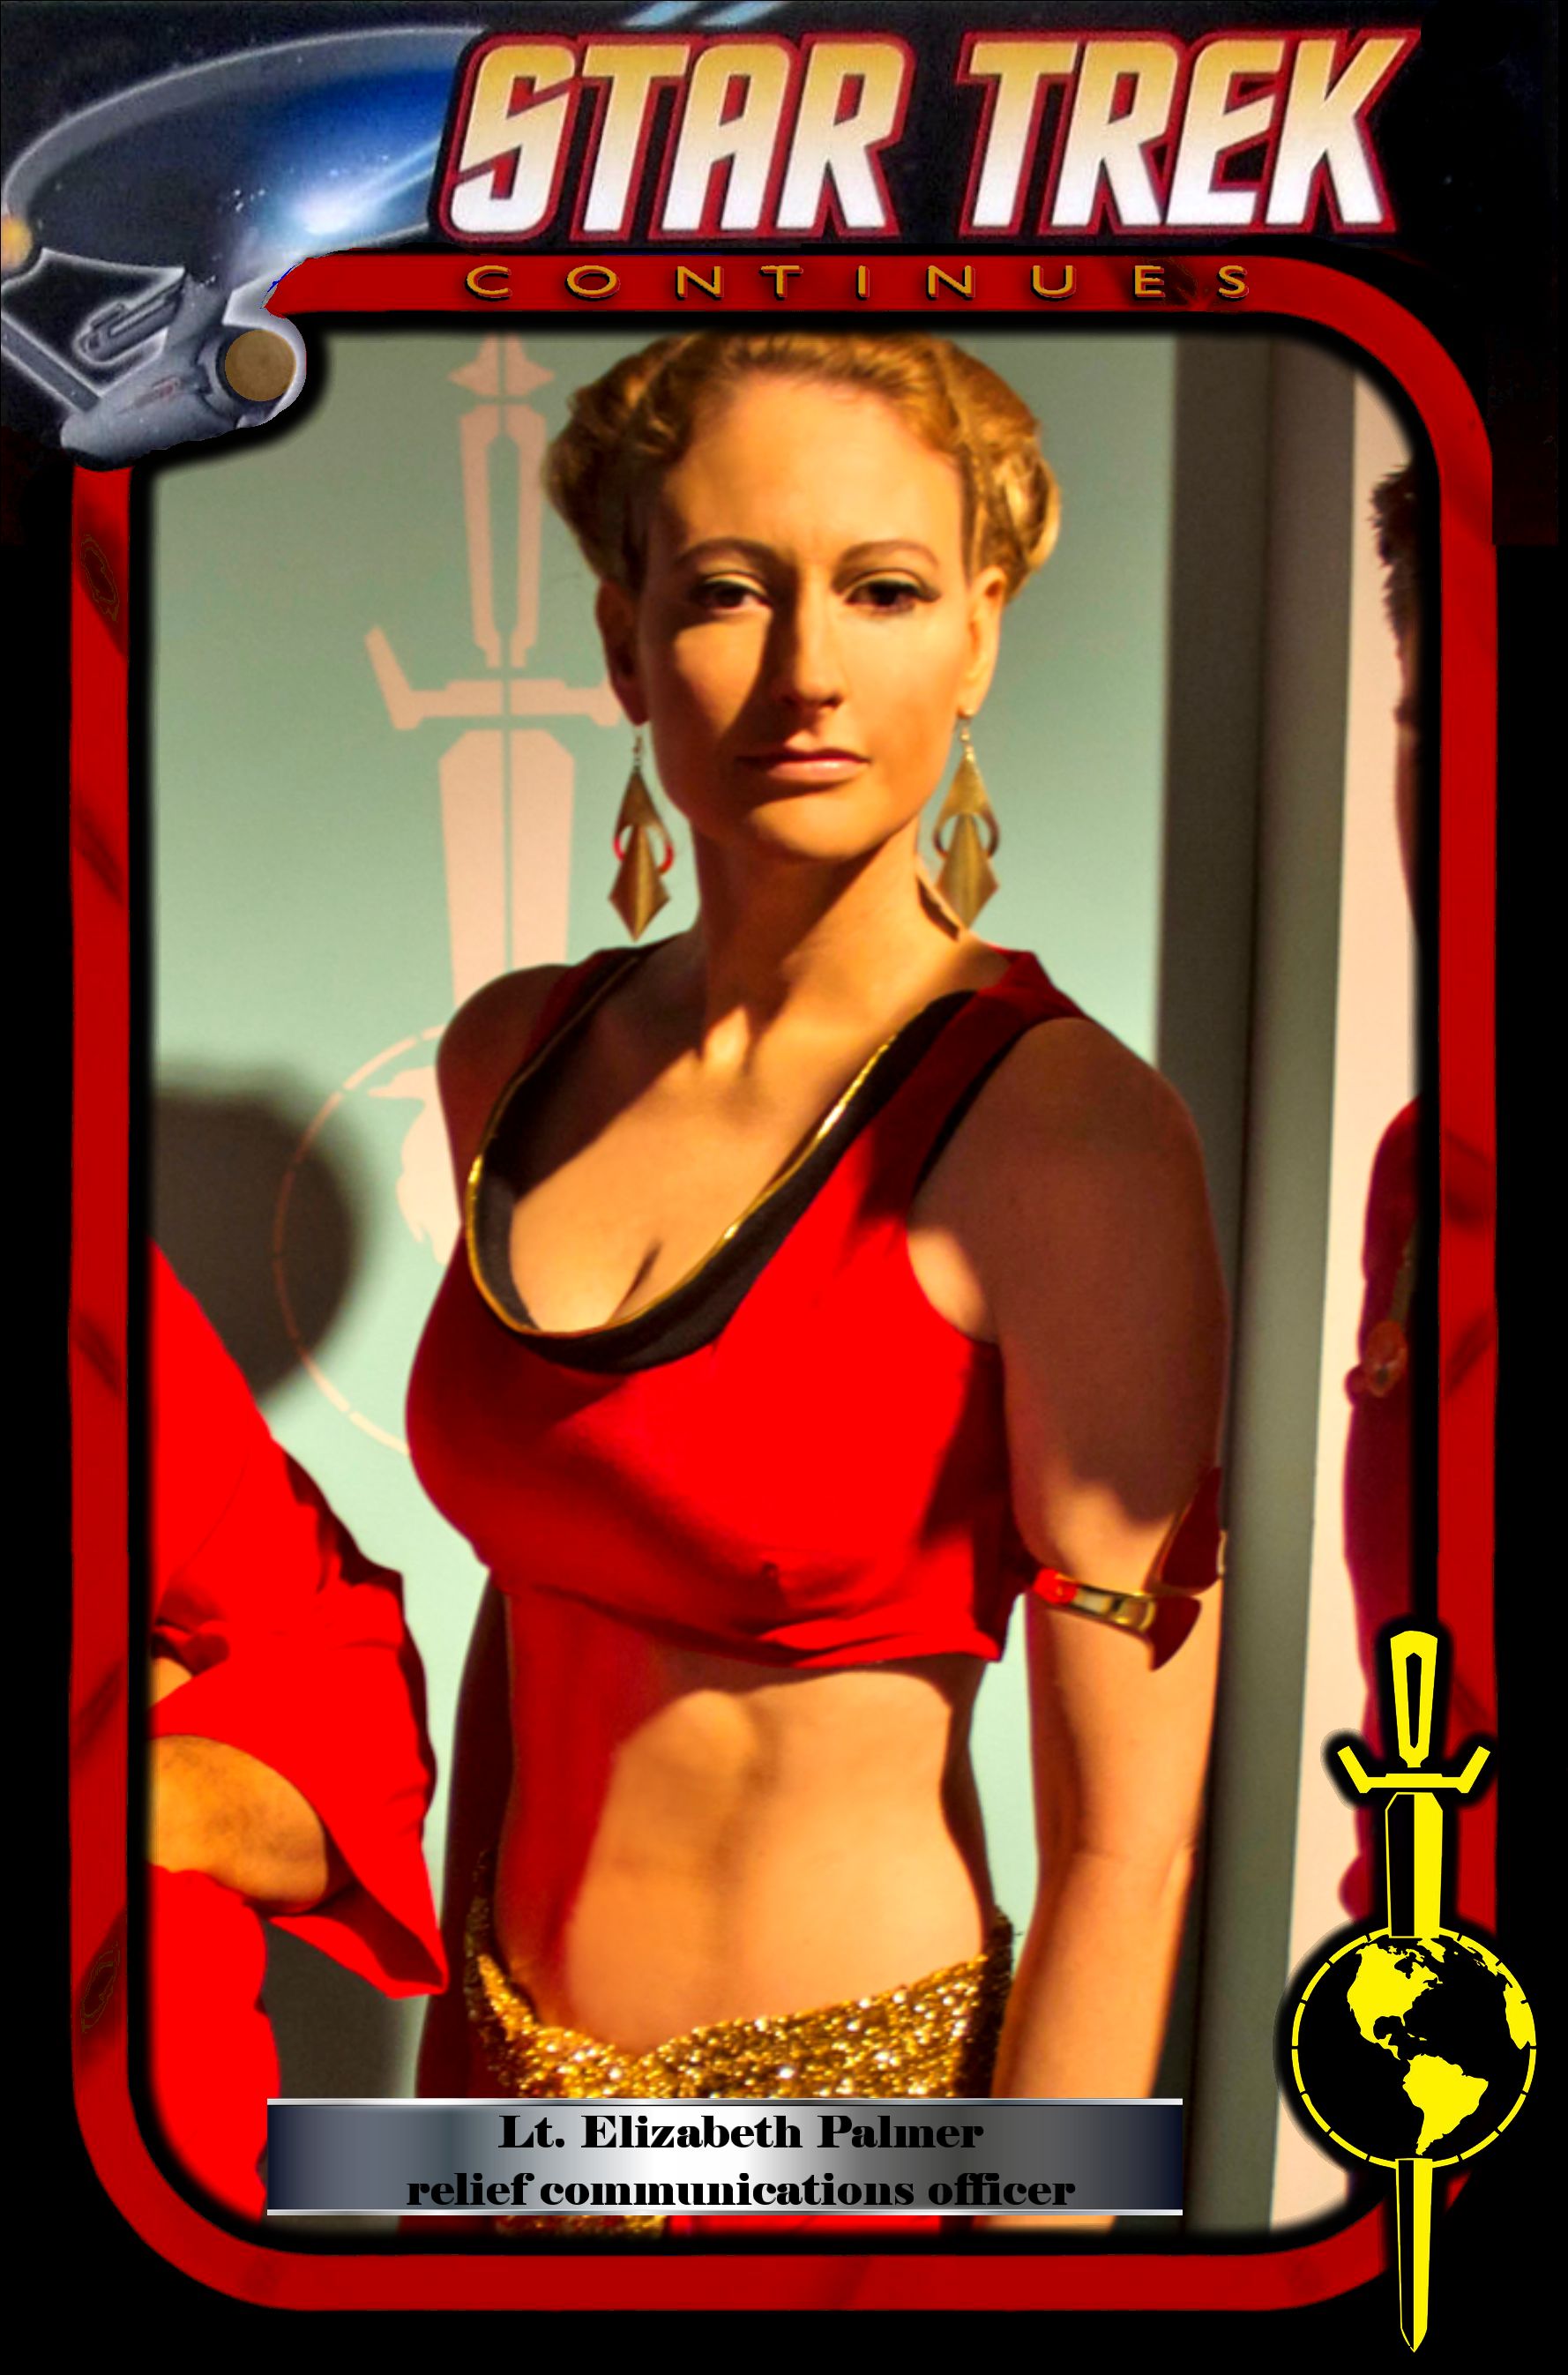 Star Trek Mirror Universe Trading Card - Cat Roberts as Lt. Elizabeth Palmer